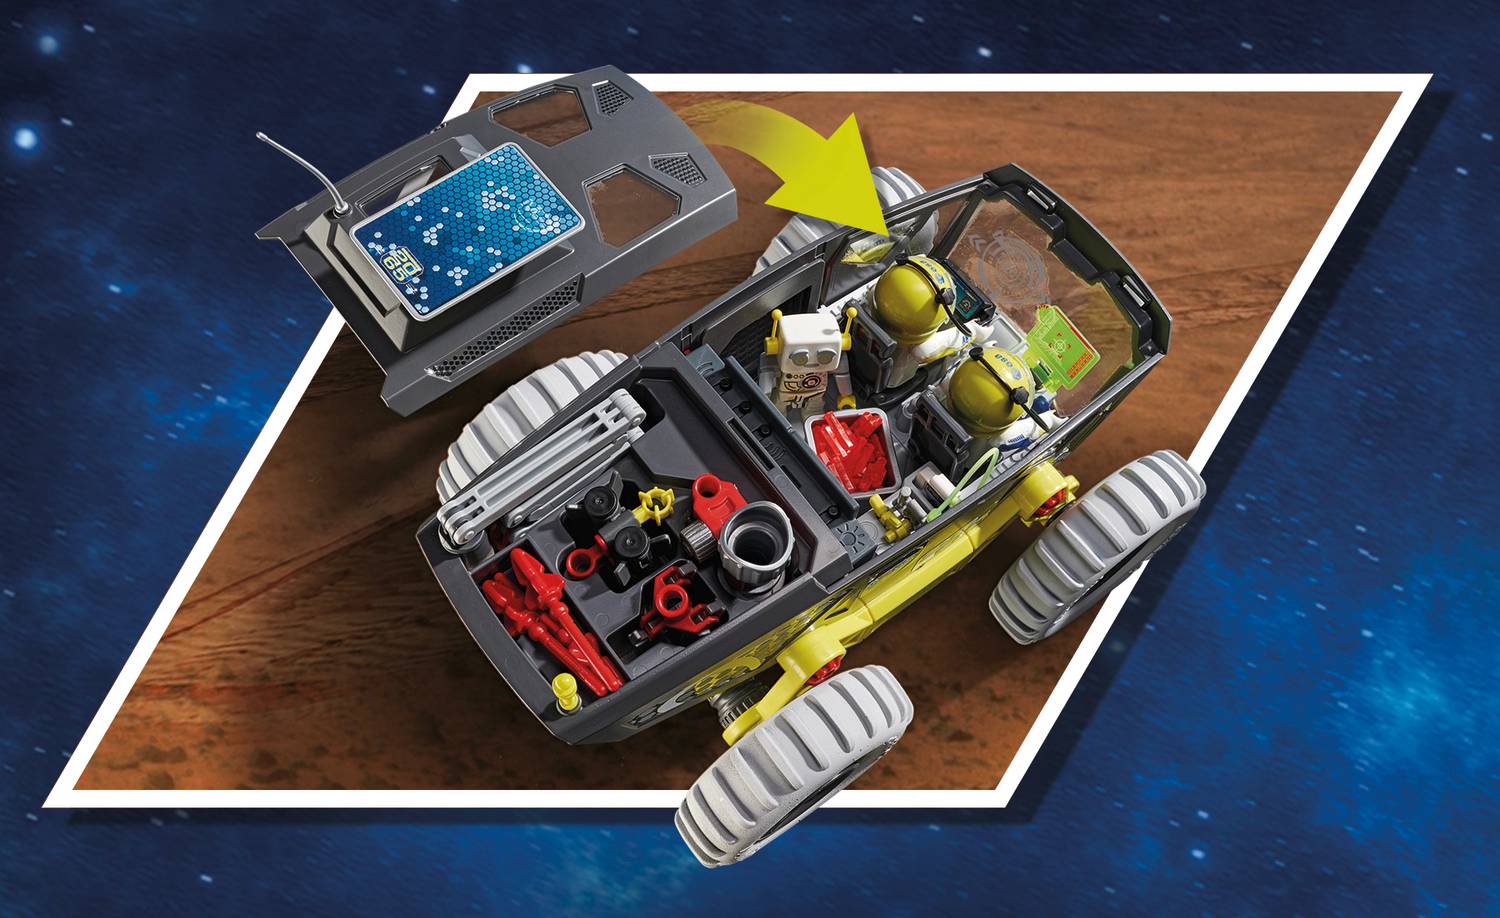 Playmobil Space Αποστολή στον Άρη με Διαστημικά Οχήματα 70888 - Playmobil, Playmobil Space